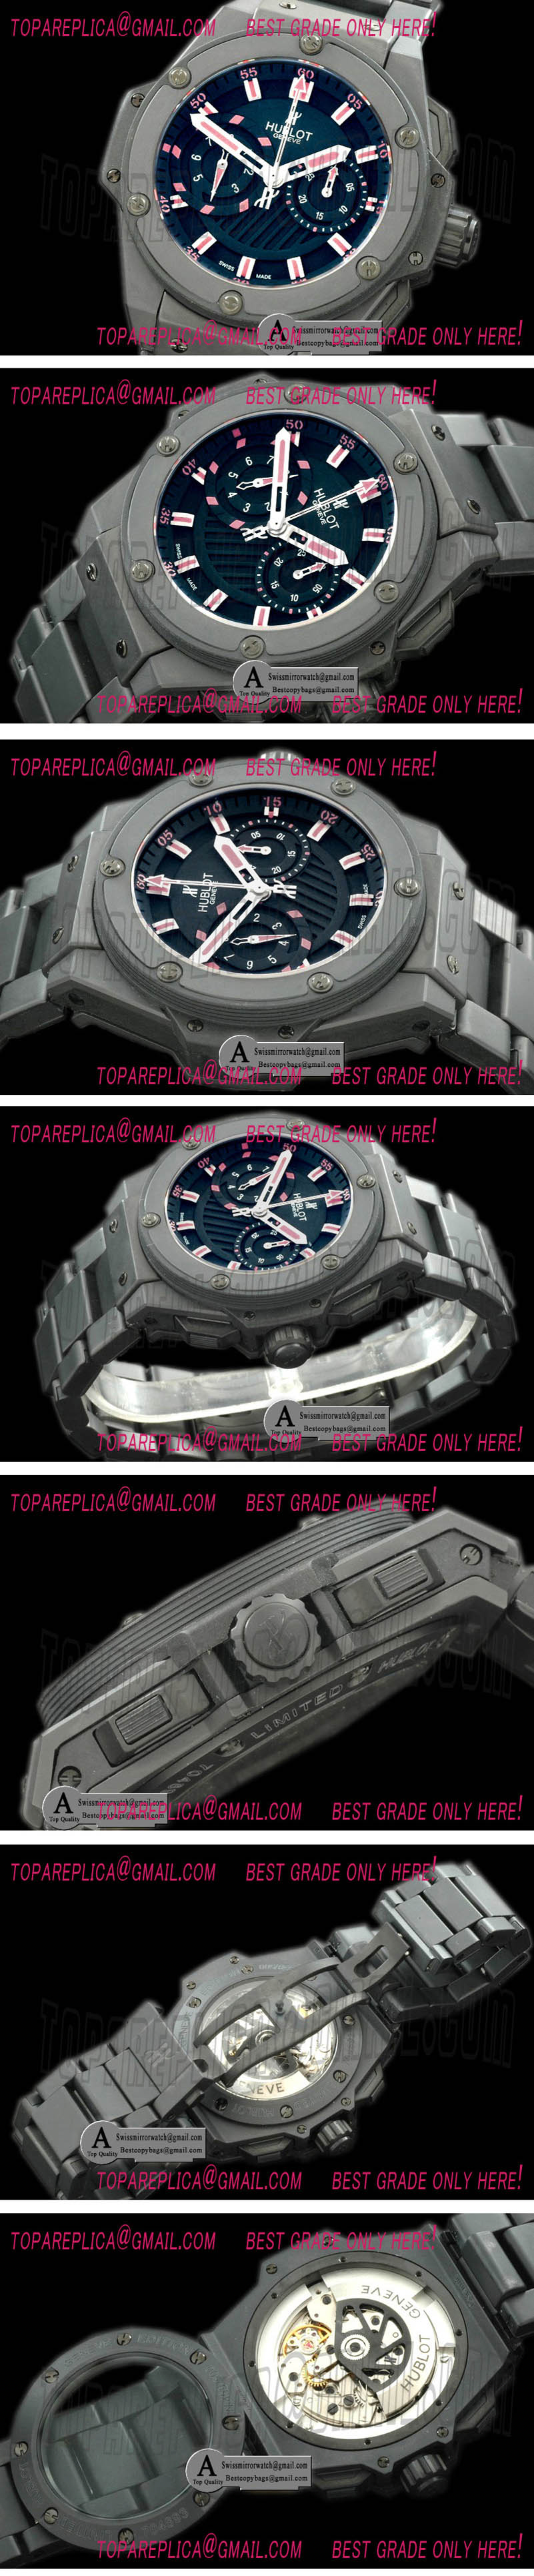 Hublot Big Bang King Power Ceramic/Ceramic Black 7750 28800bph Replica Watches